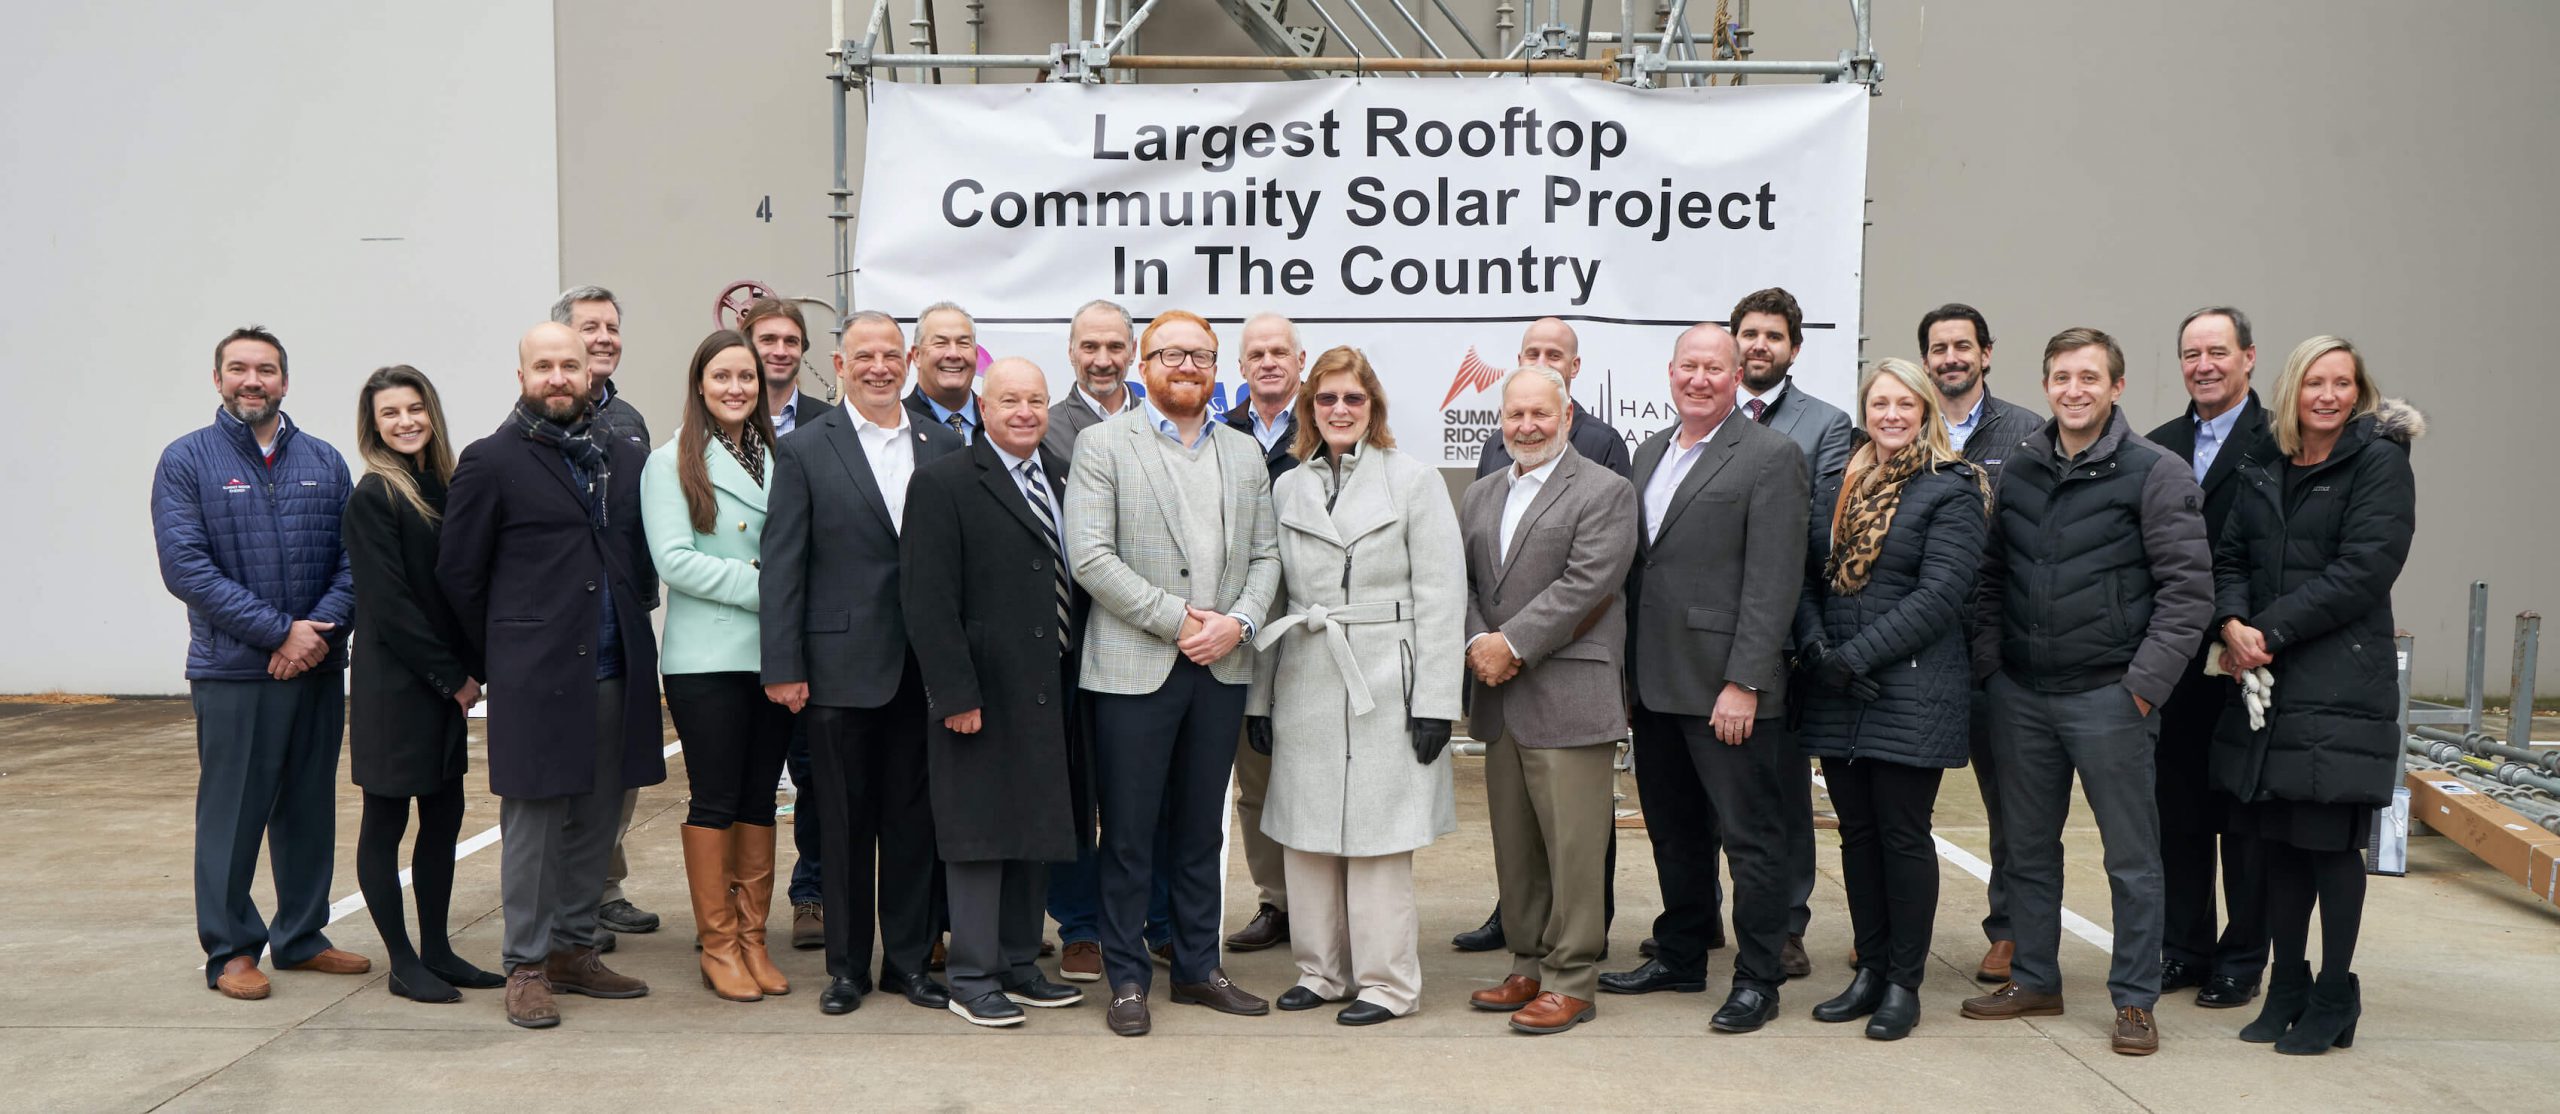 Summit Ridge Energy, 548 Enterprise, and Ecademy Launch Illinois-Based Green Job Training Center